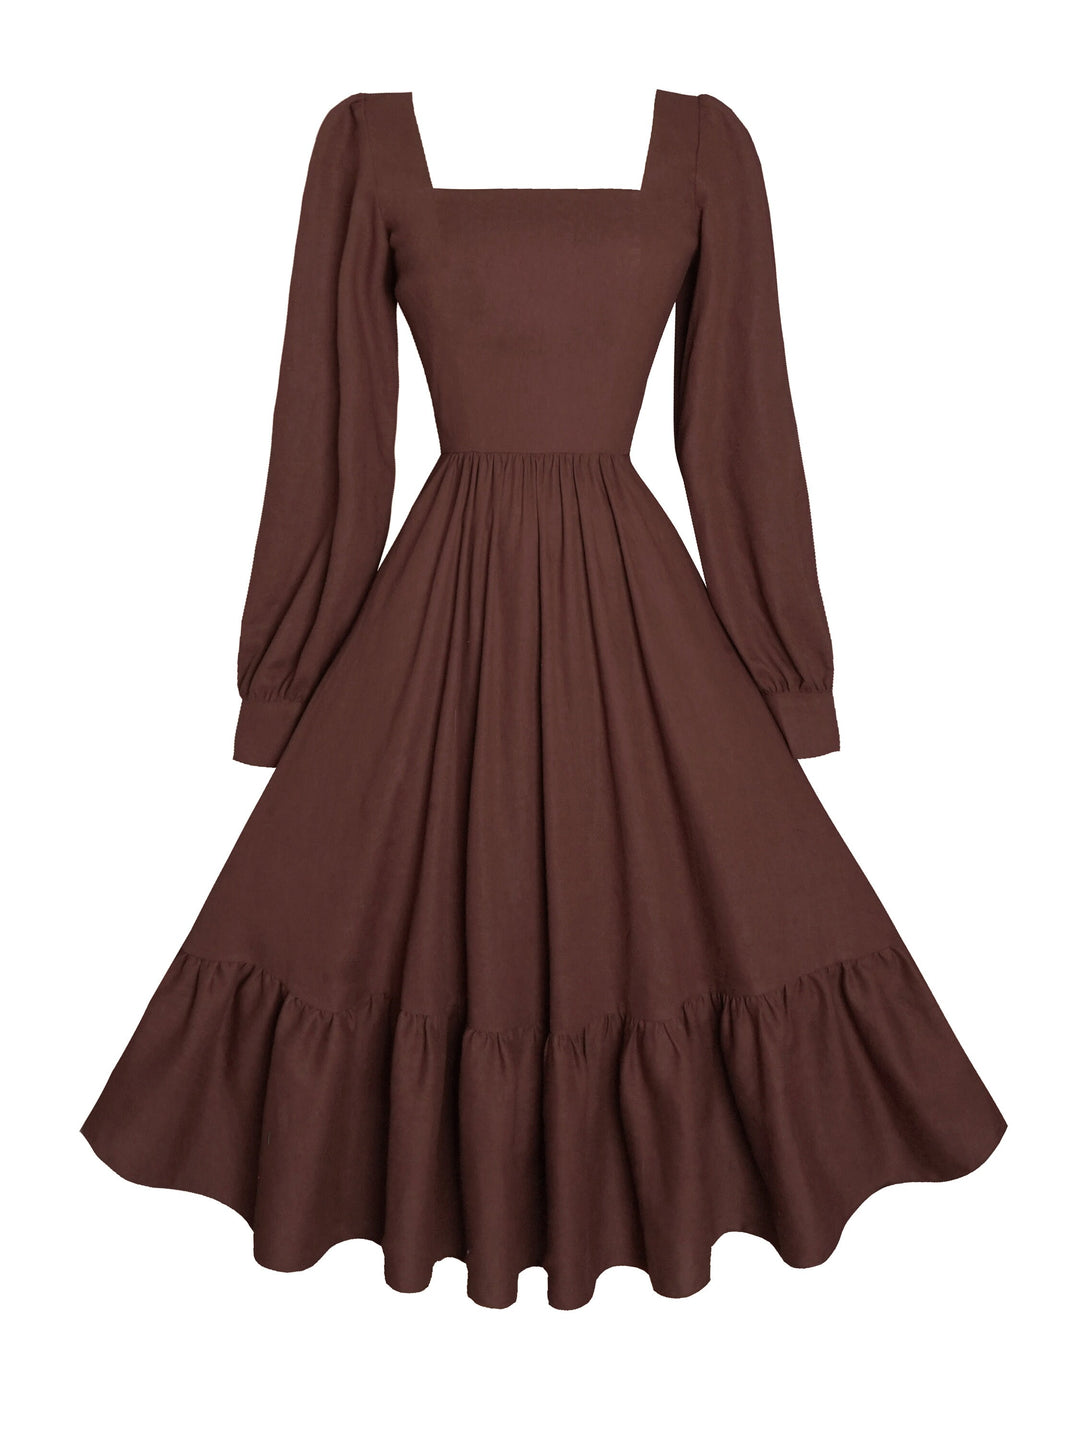 MTO - Mary Dress in Walnut Linen